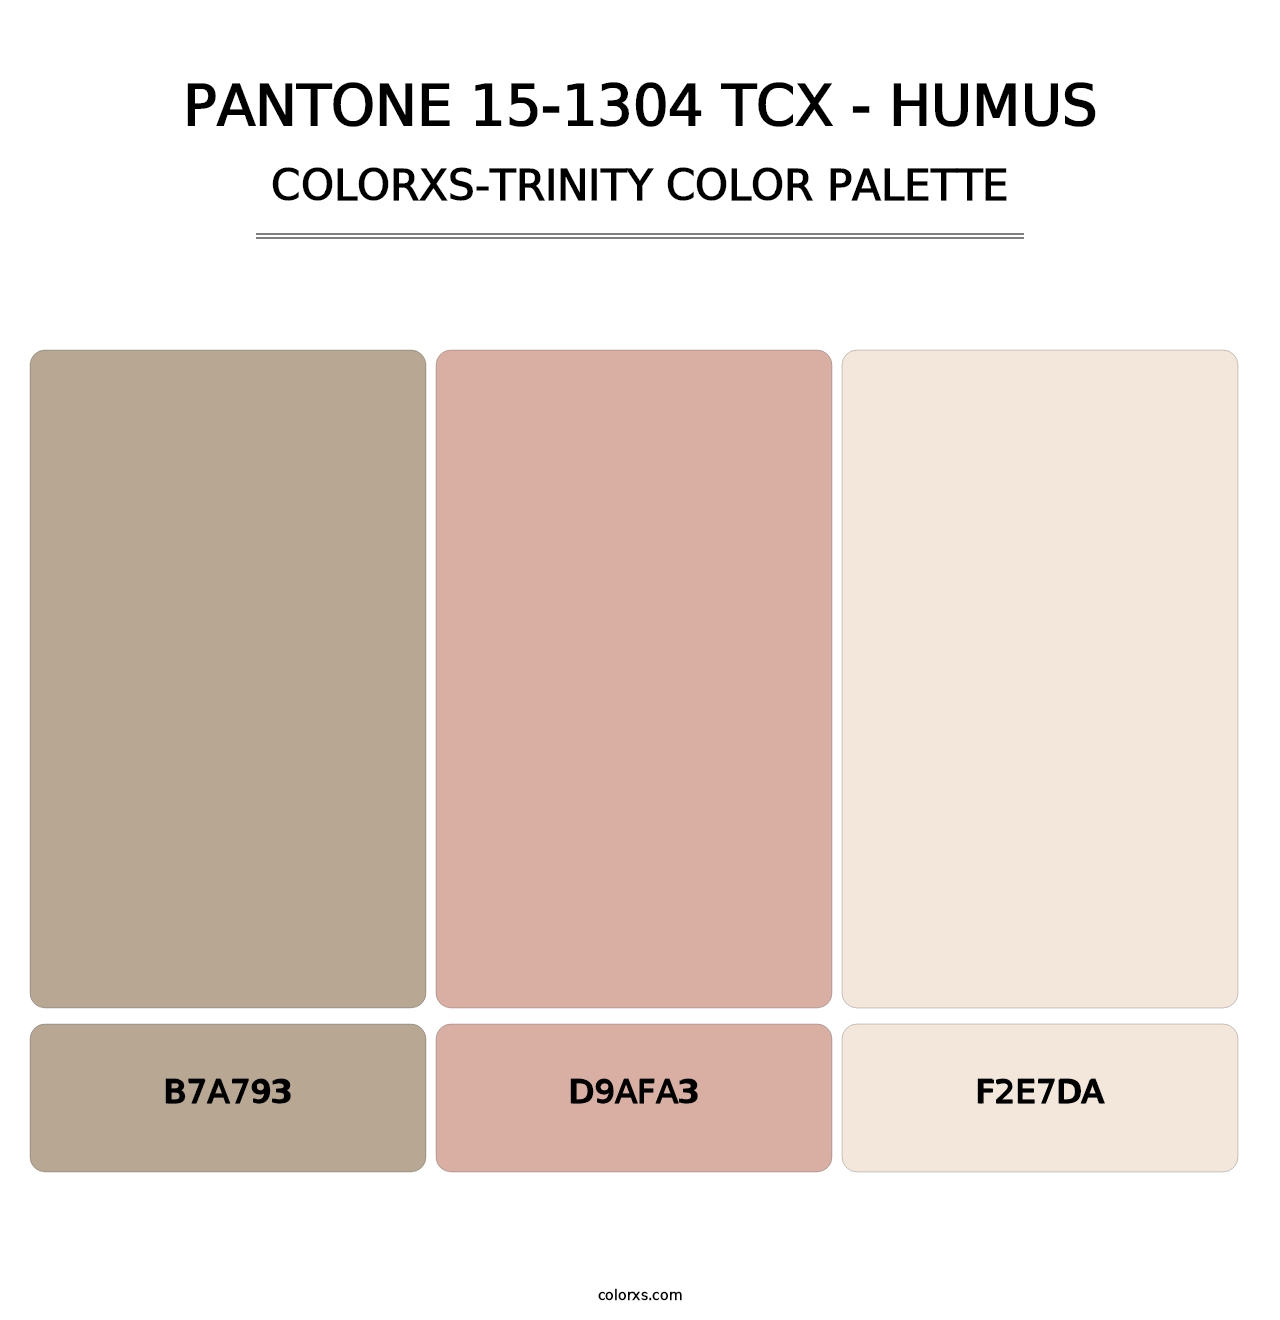 PANTONE 15-1304 TCX - Humus - Colorxs Trinity Palette